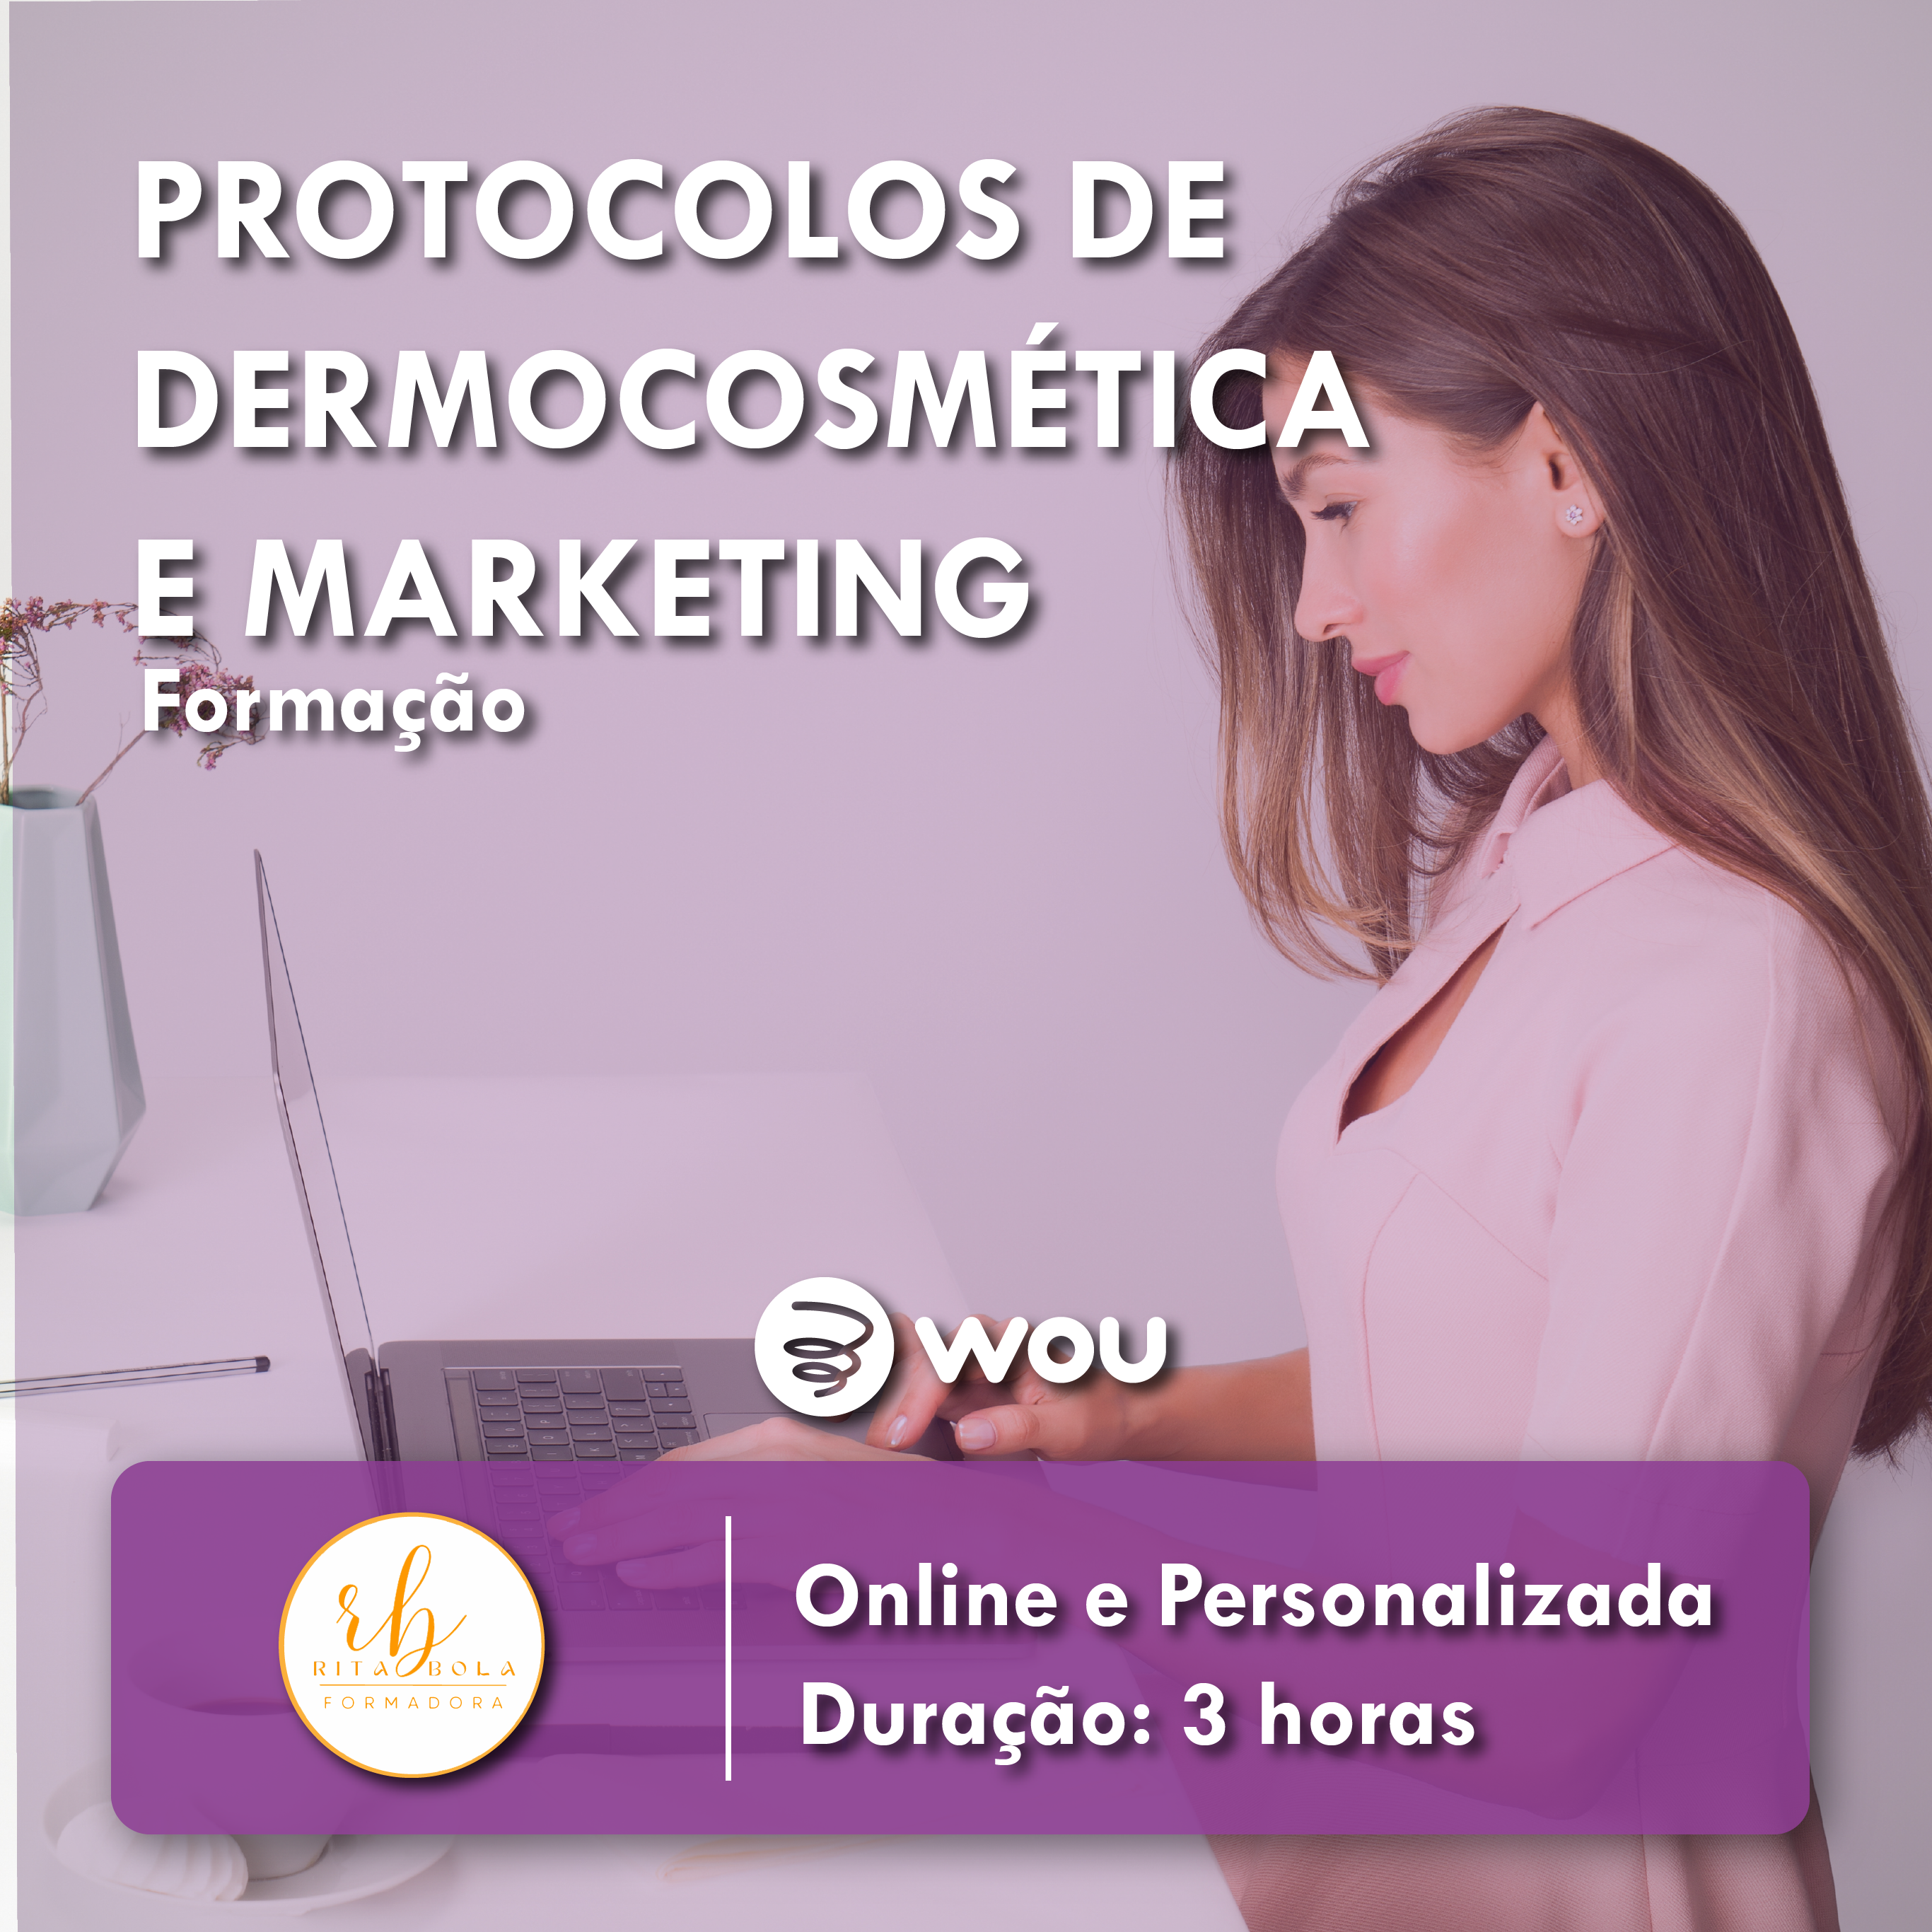 Dermocosmetics and Marketing Protocols Course